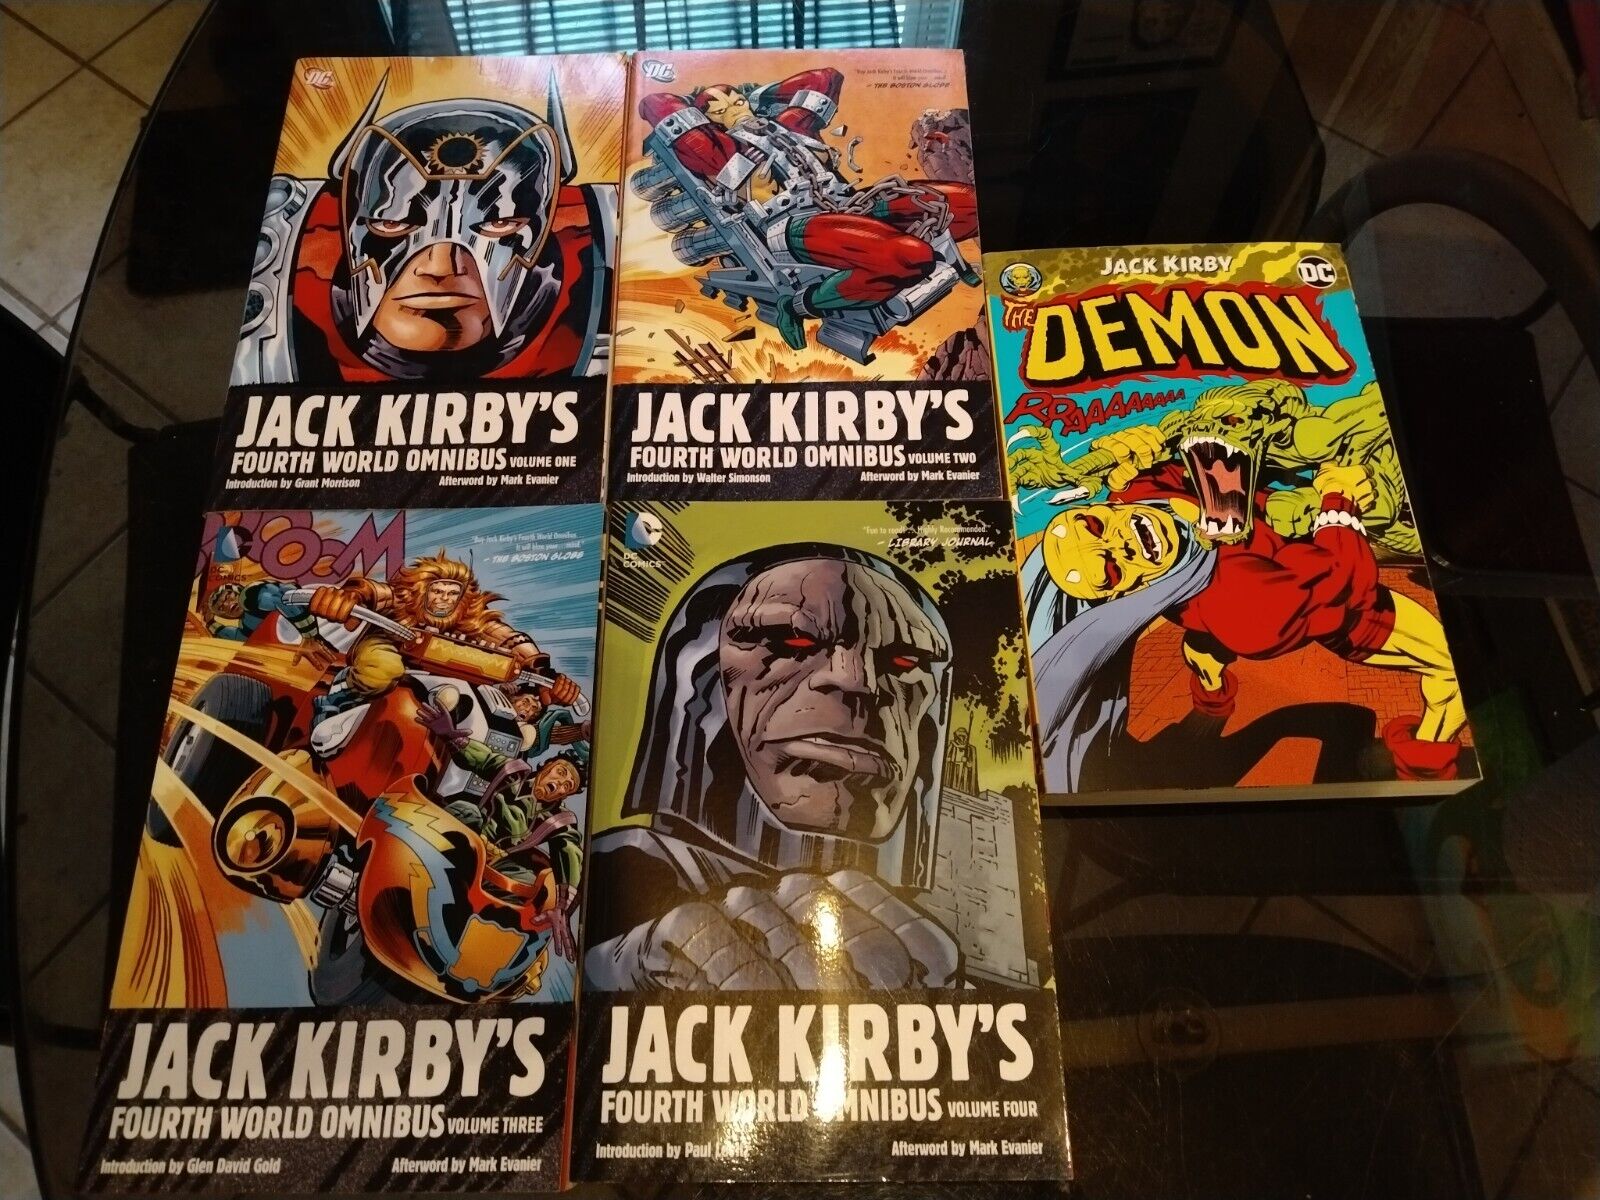 Lot of 5 Jack Kirby graphic novels: Fourth World Omnibus Vol 1-4, plus Demon